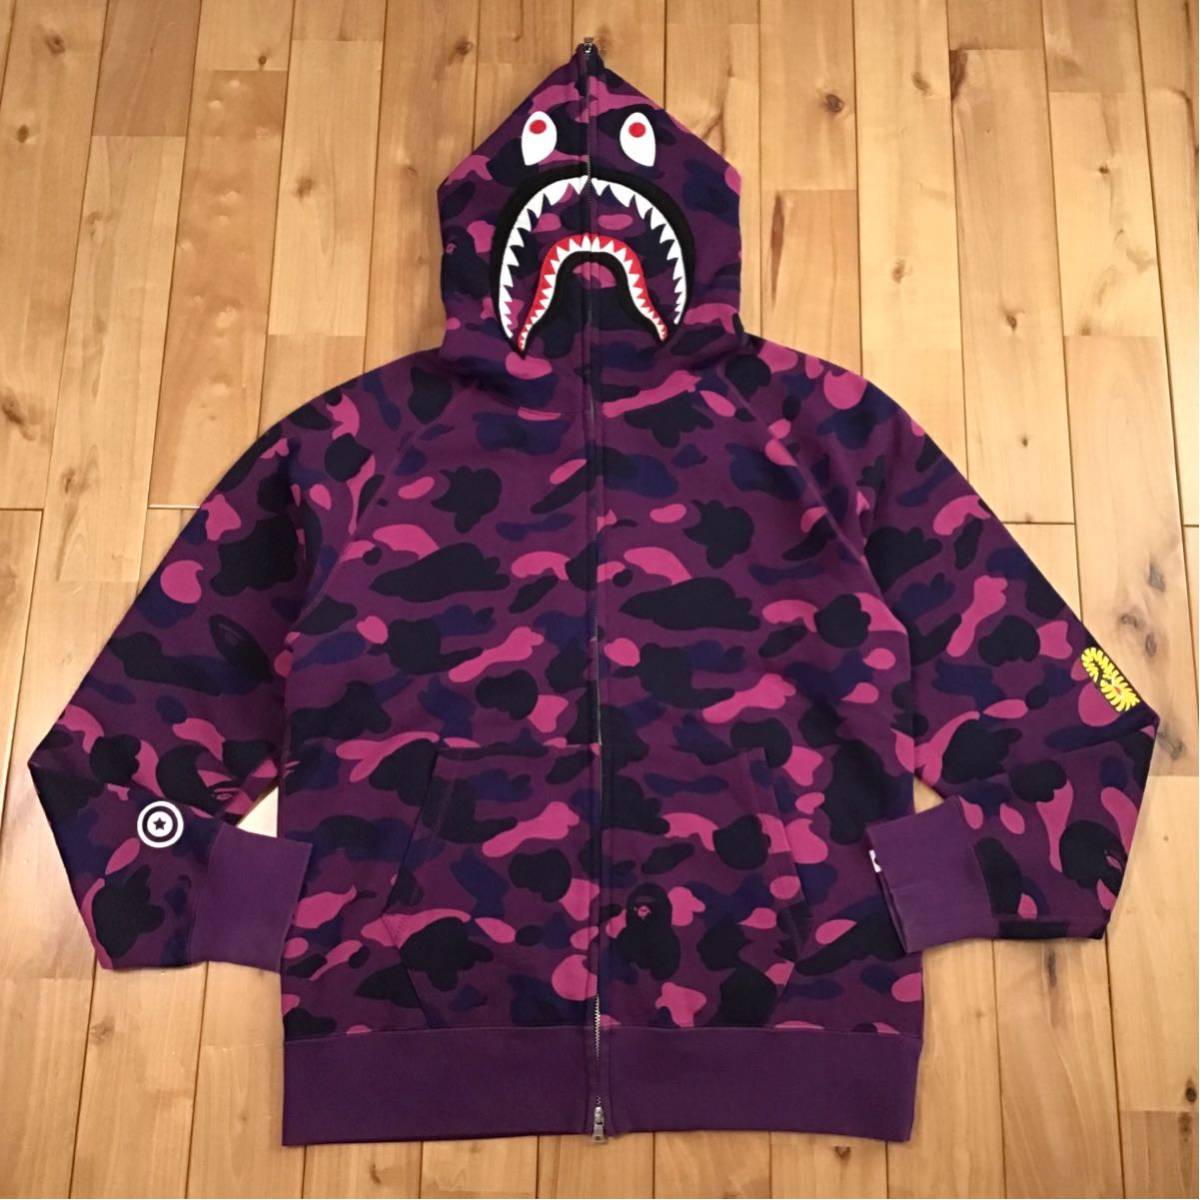 Purple camo シャーク パーカー Lサイズ shark full zip hoodie a bathing ape BAPE エイプ ベイプ アベイシングエイプ 迷彩 z266